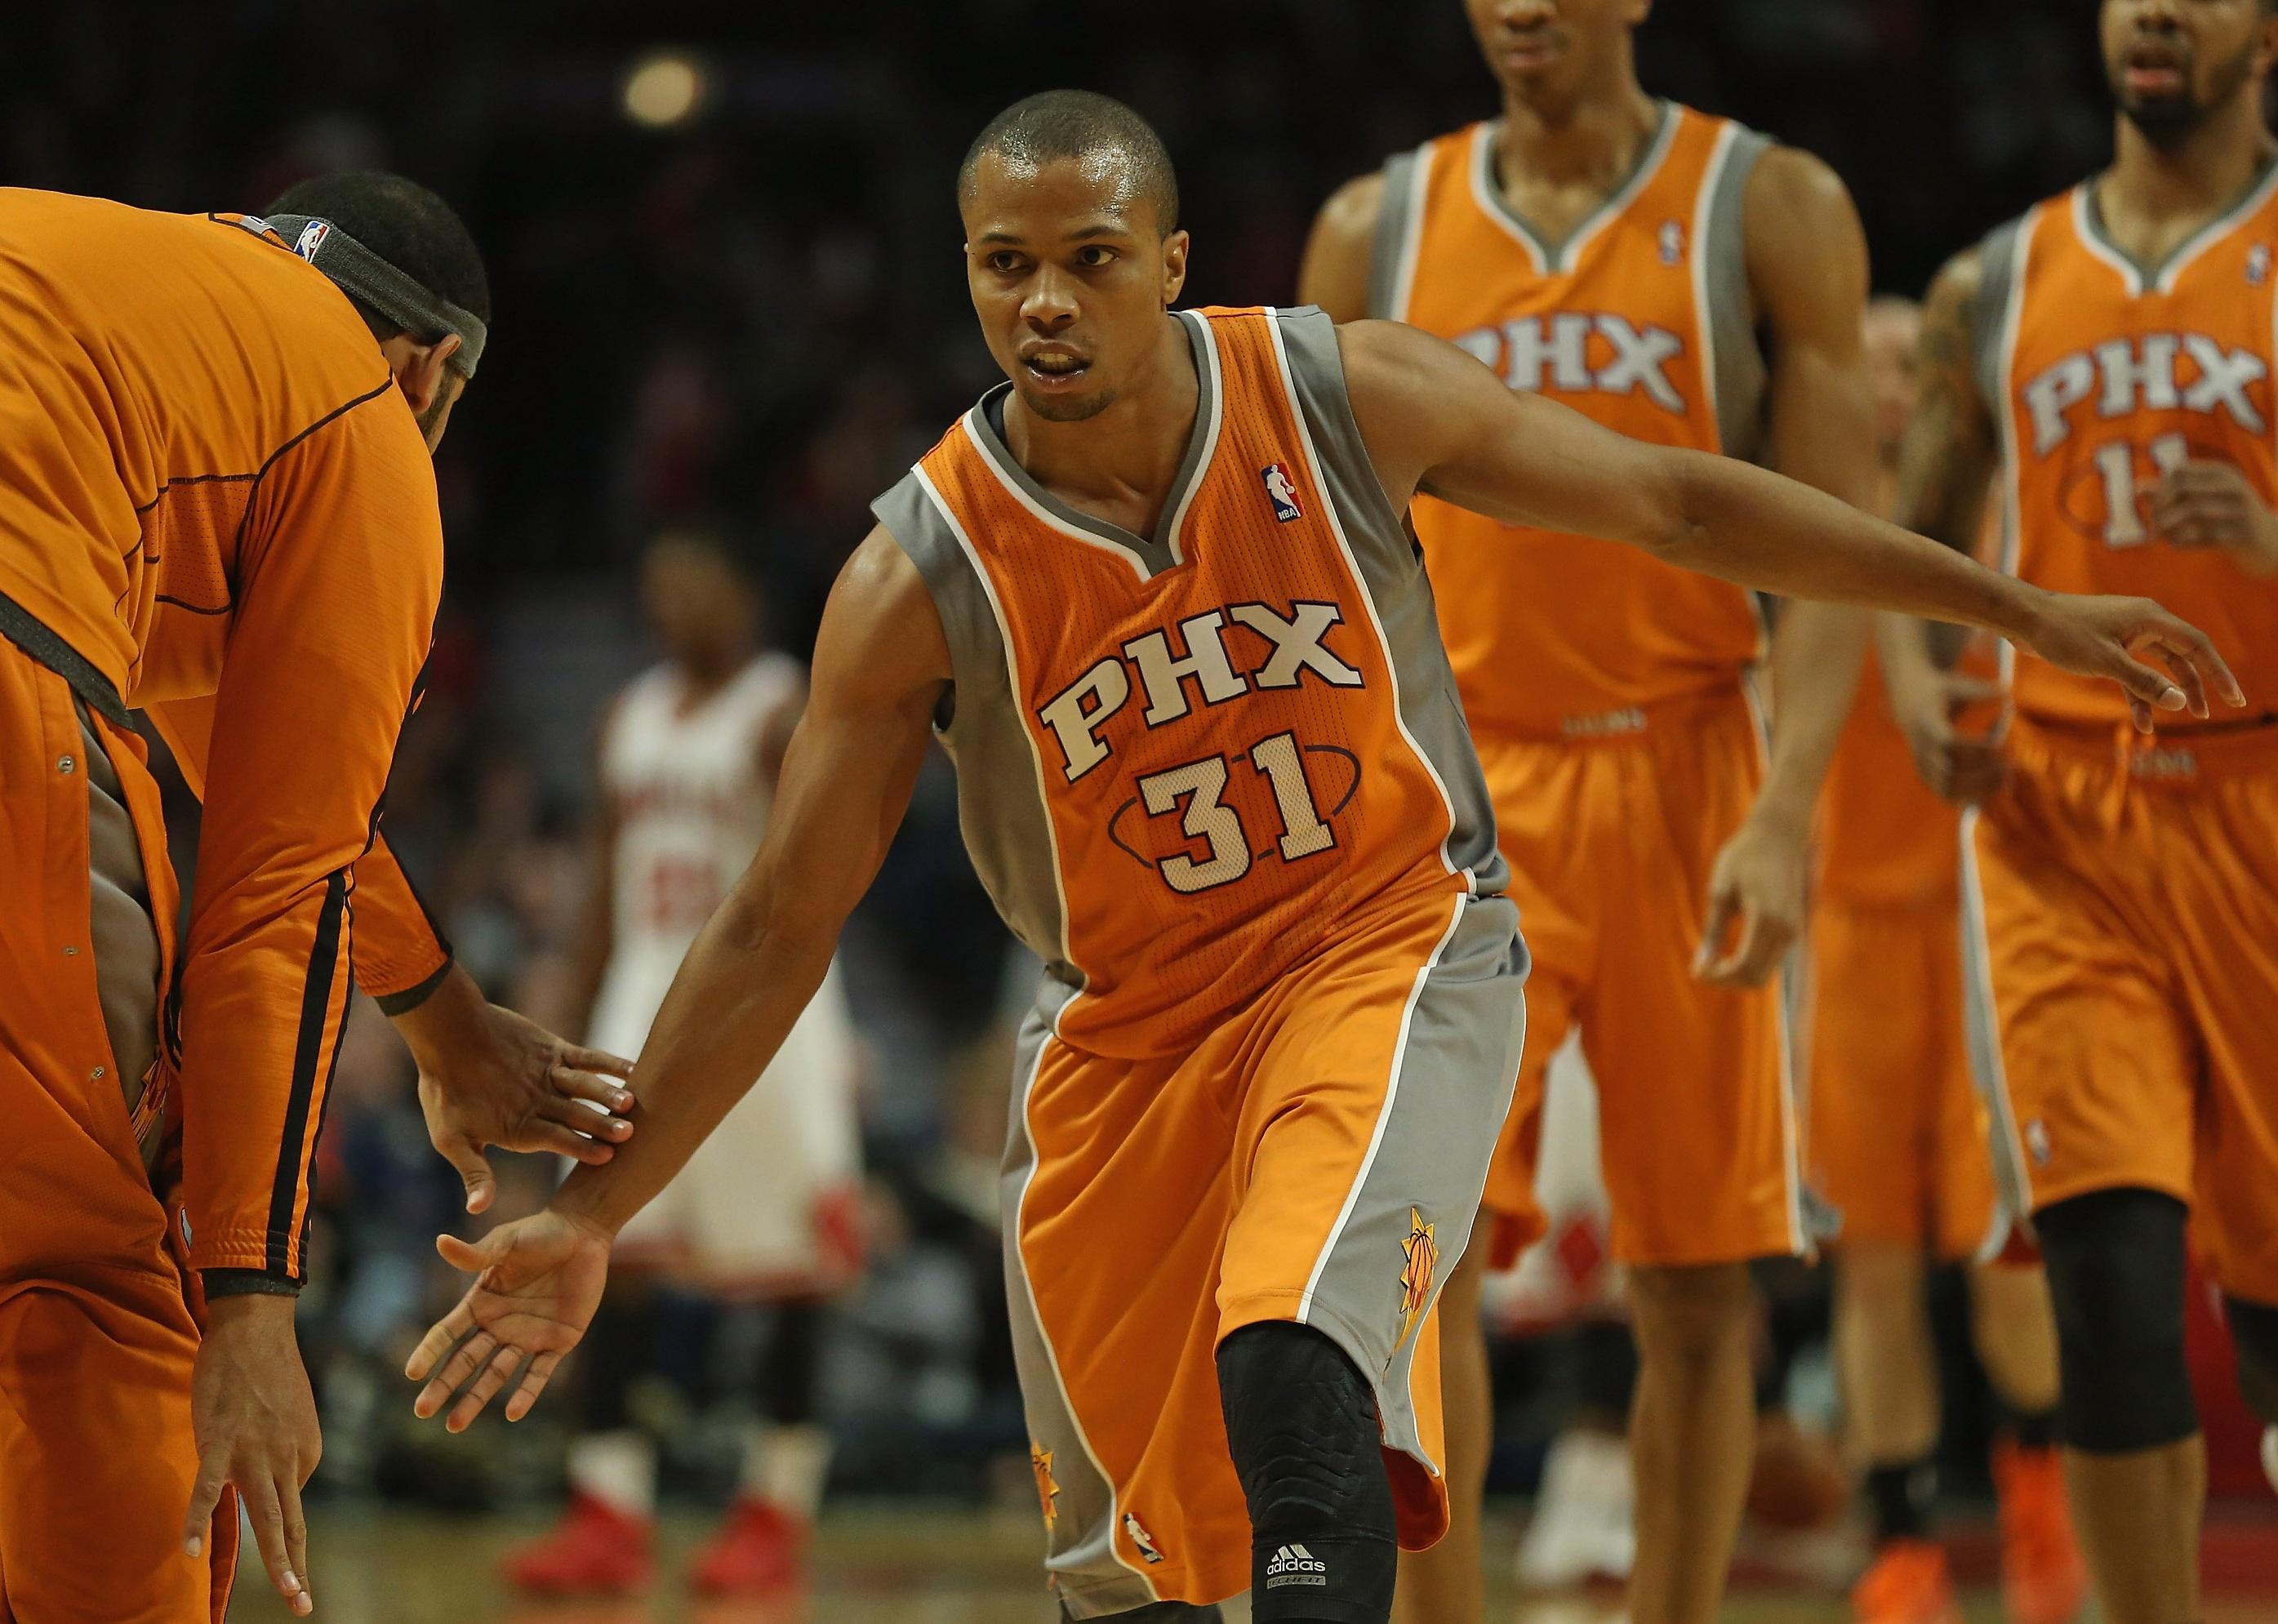  Sebastian Telfair of the Phoenix Suns is congratulated by teammates as he leaves the floor.